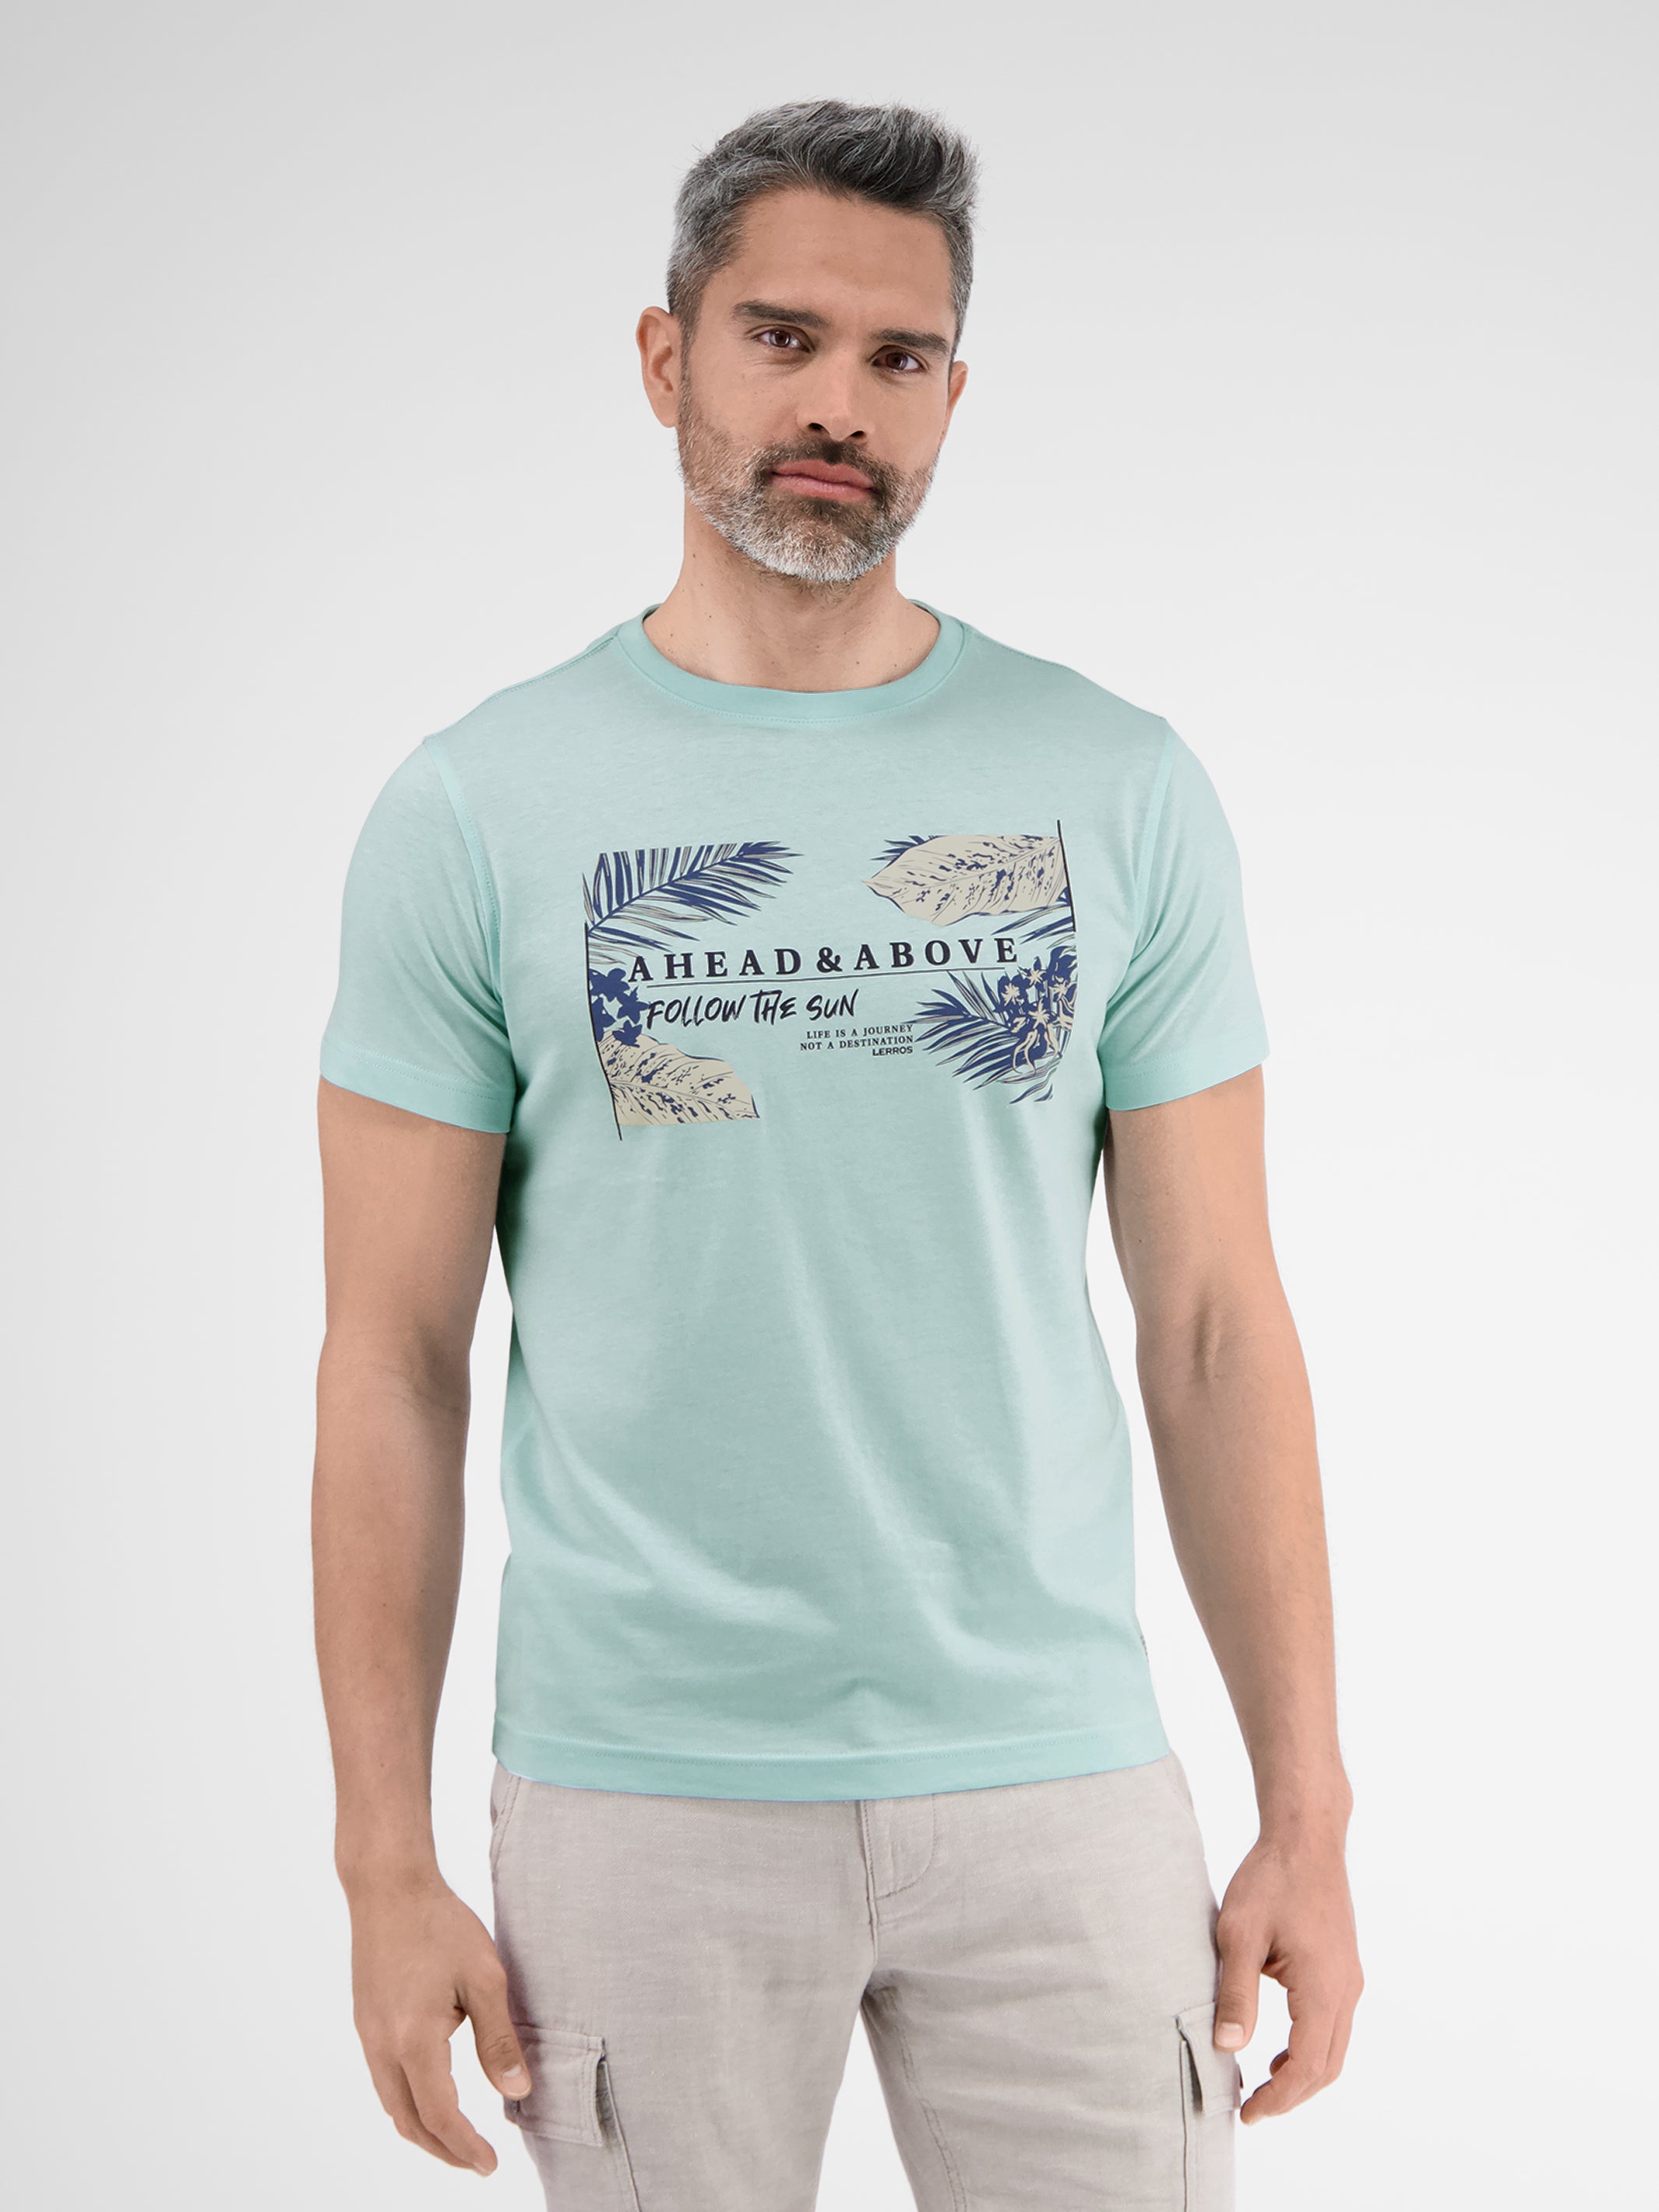 T-shirt with design photo print – LERROS SHOP